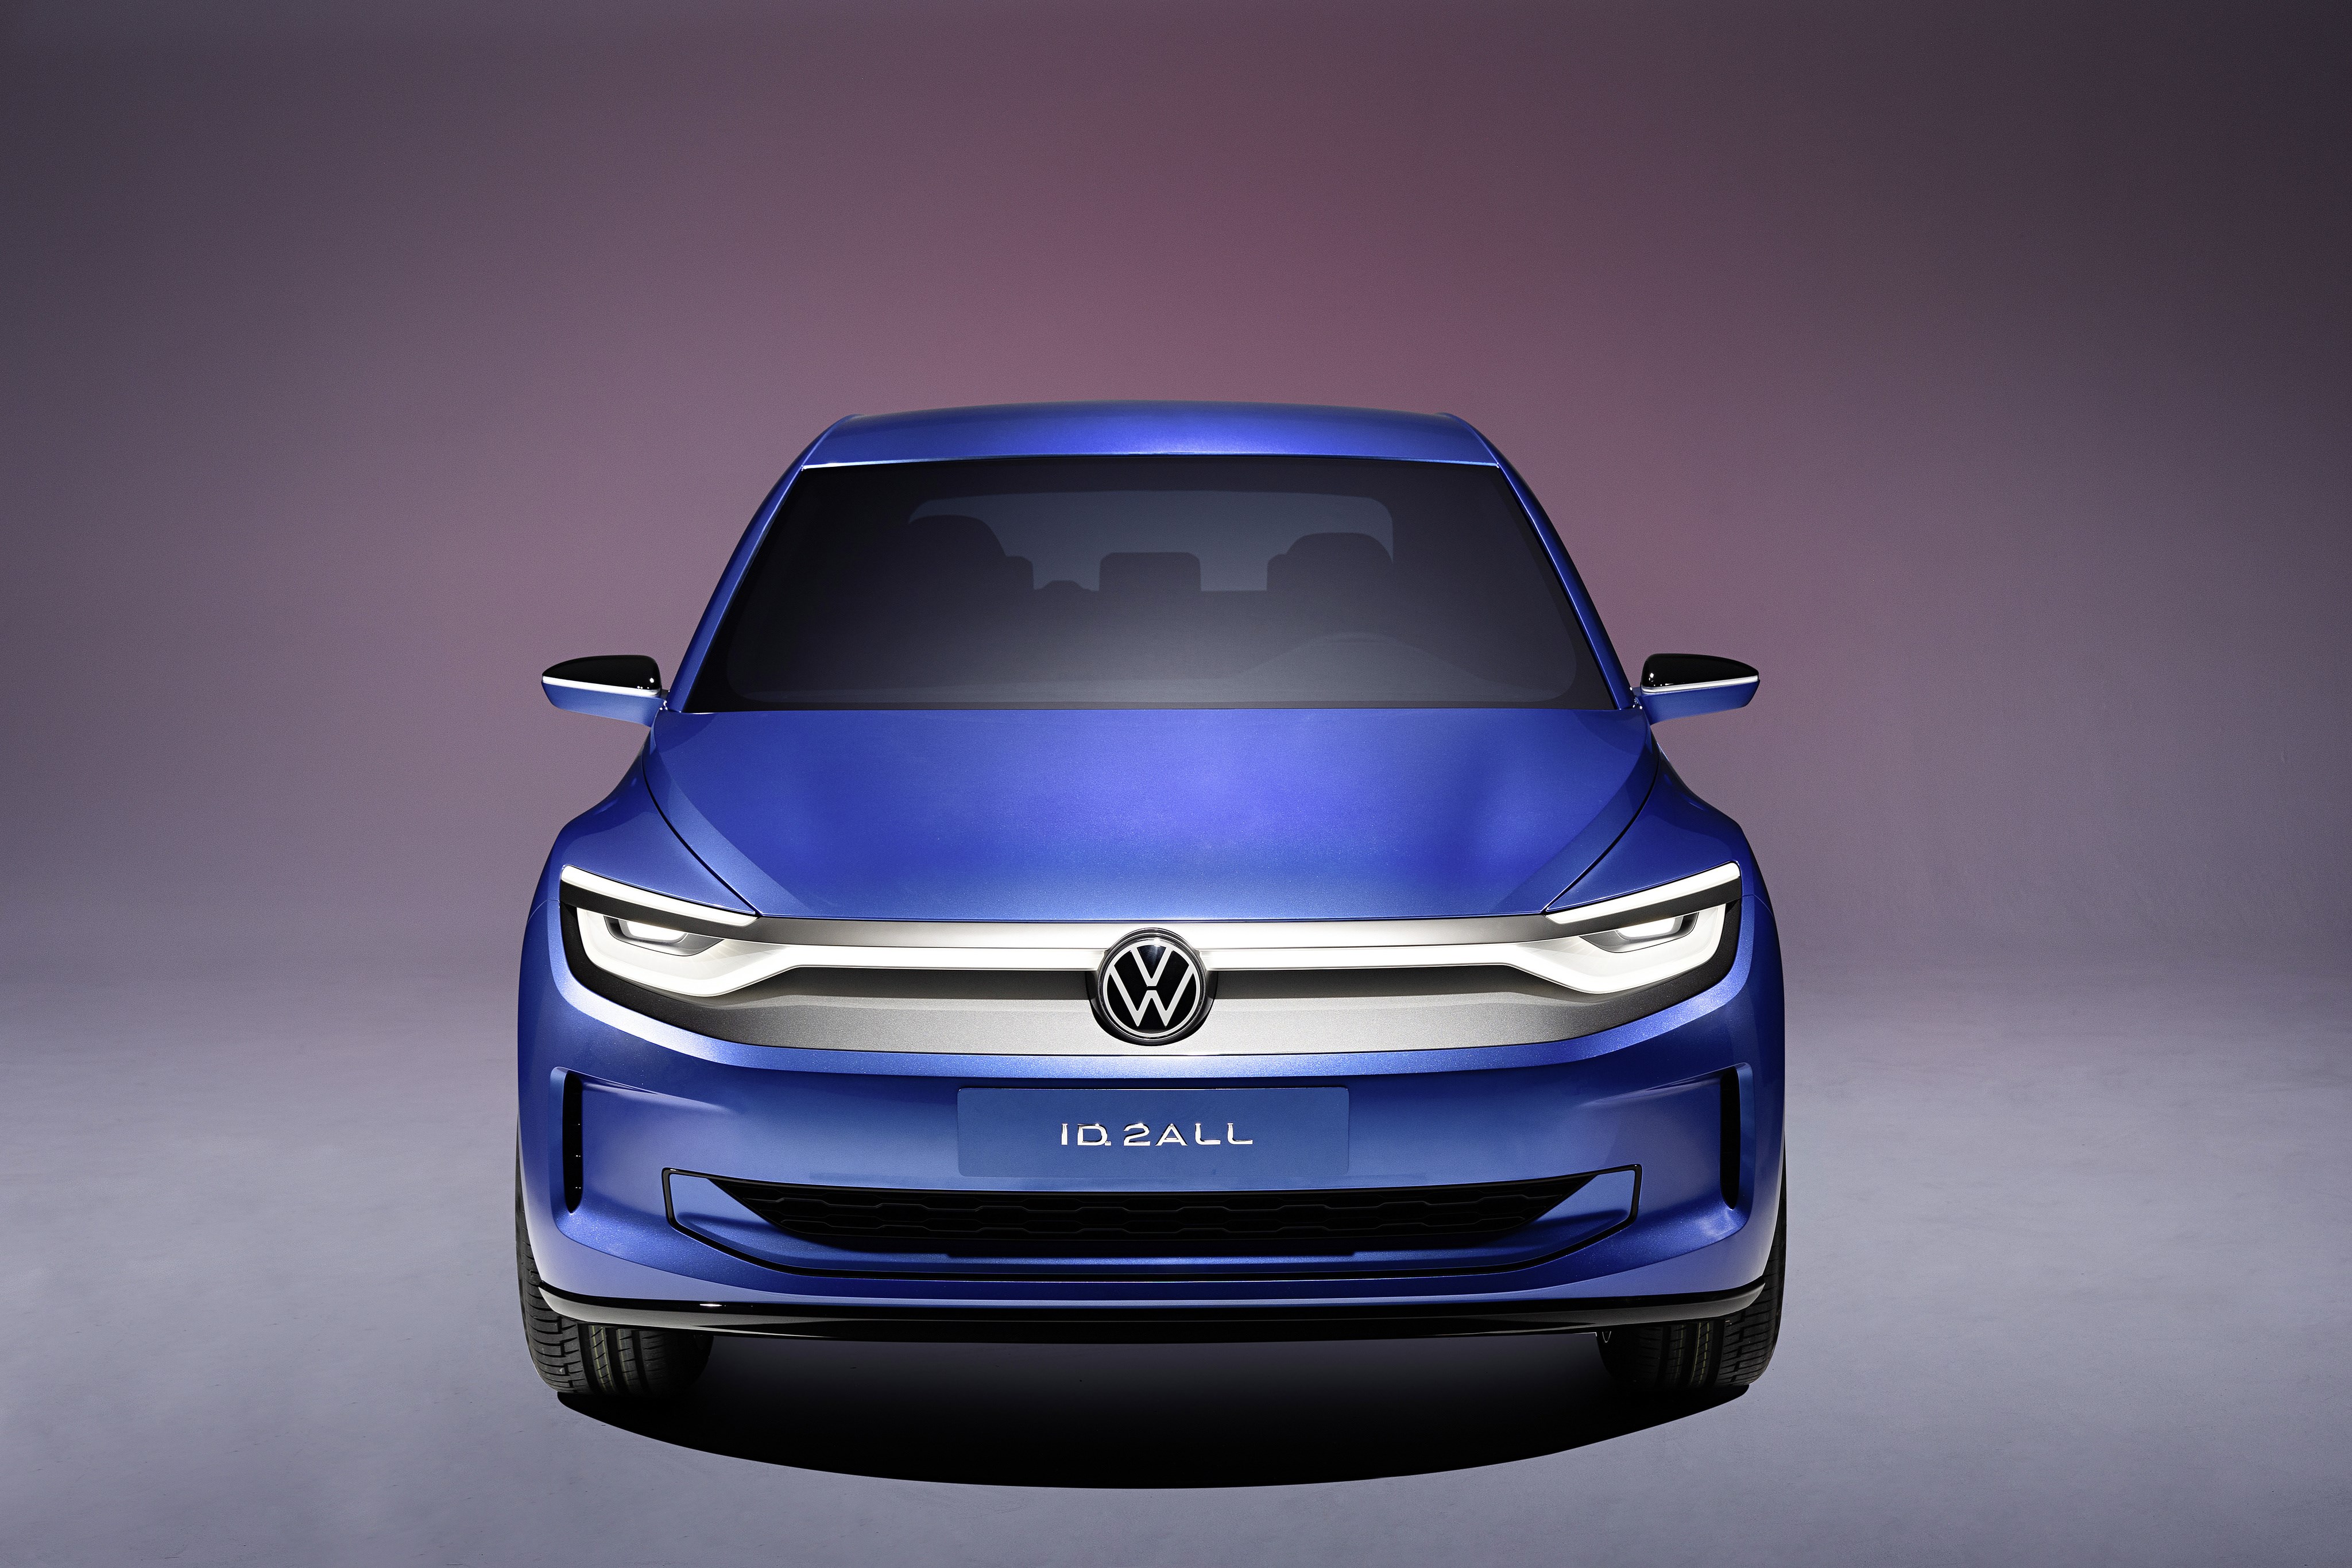 Volkswagen en ucuz elektrikli otomobilini tanıttı: İşte ID. 2all